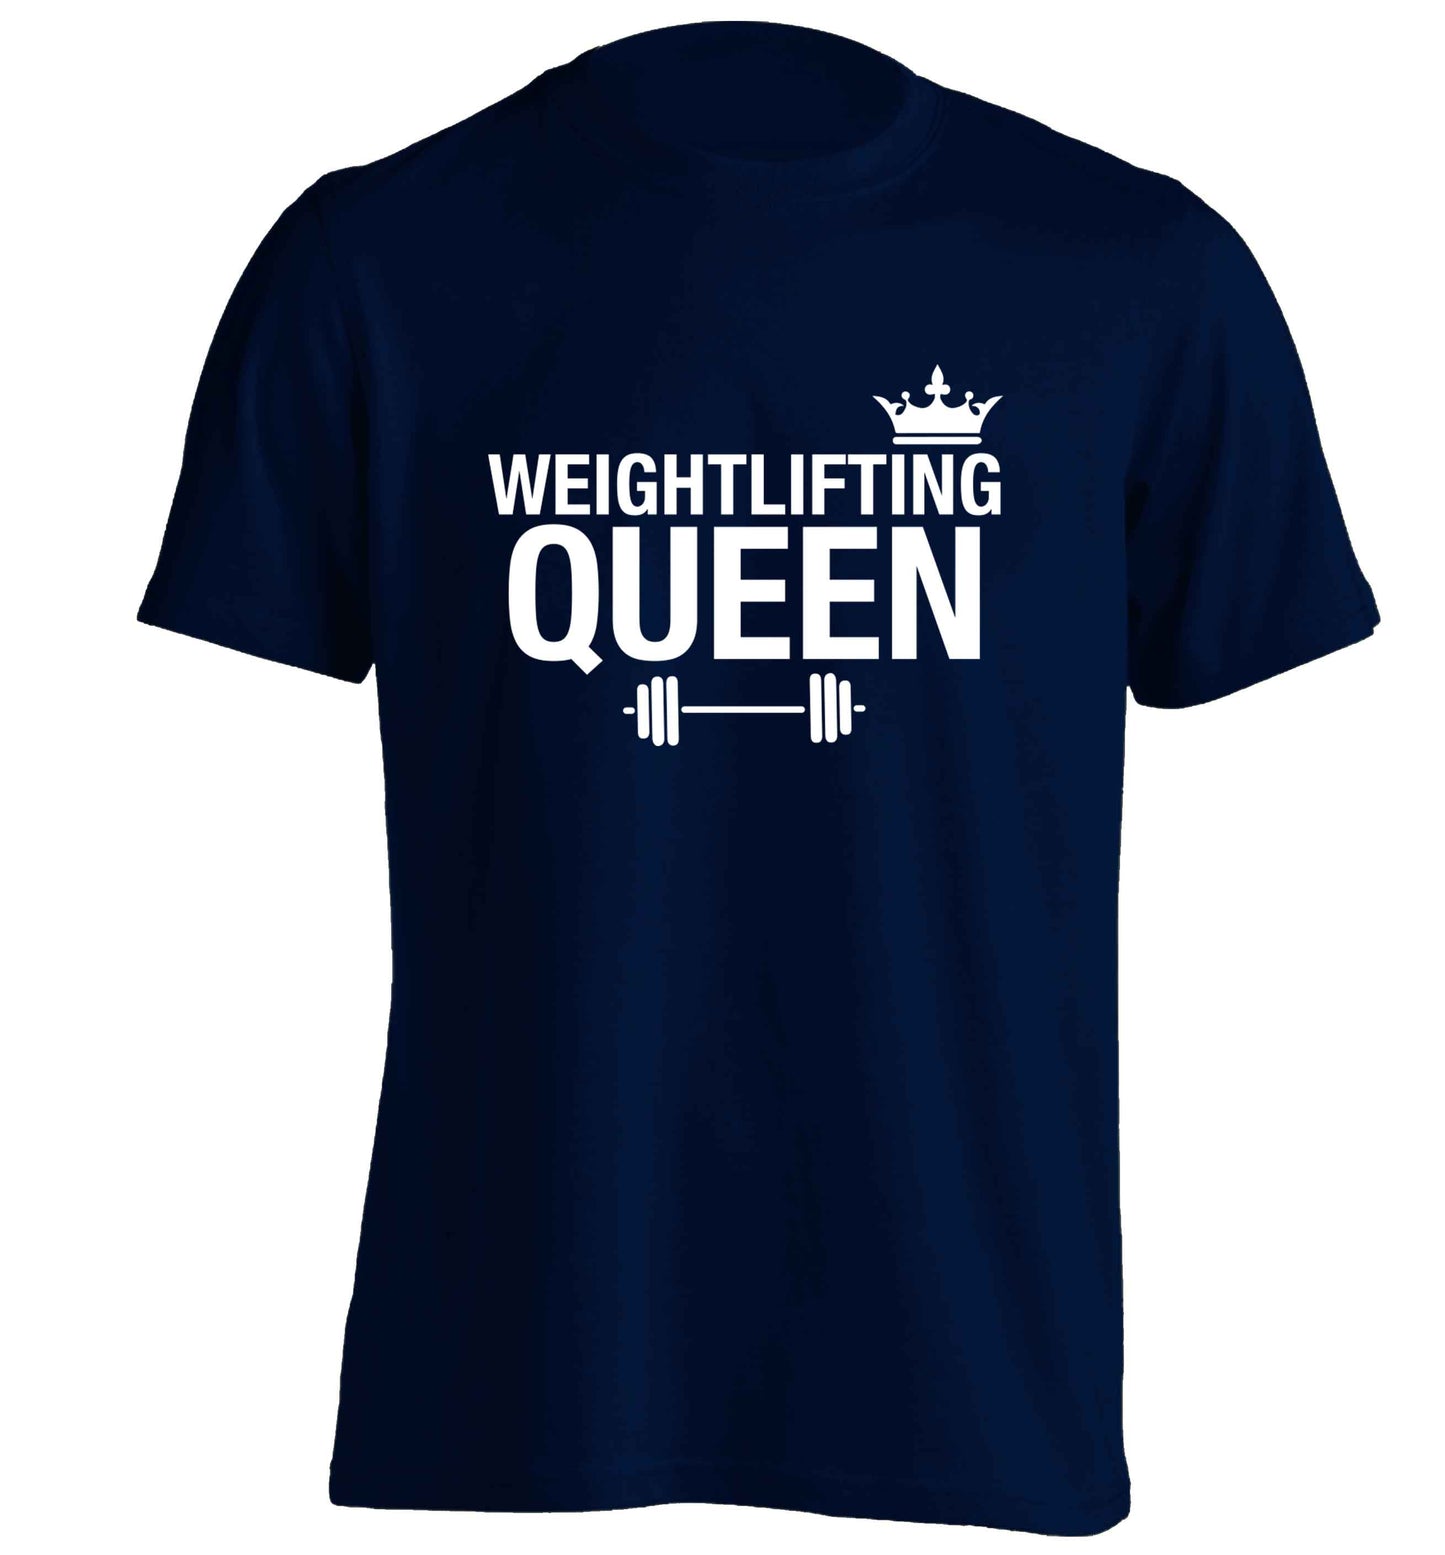 Weightlifting Queen adults unisex navy Tshirt 2XL